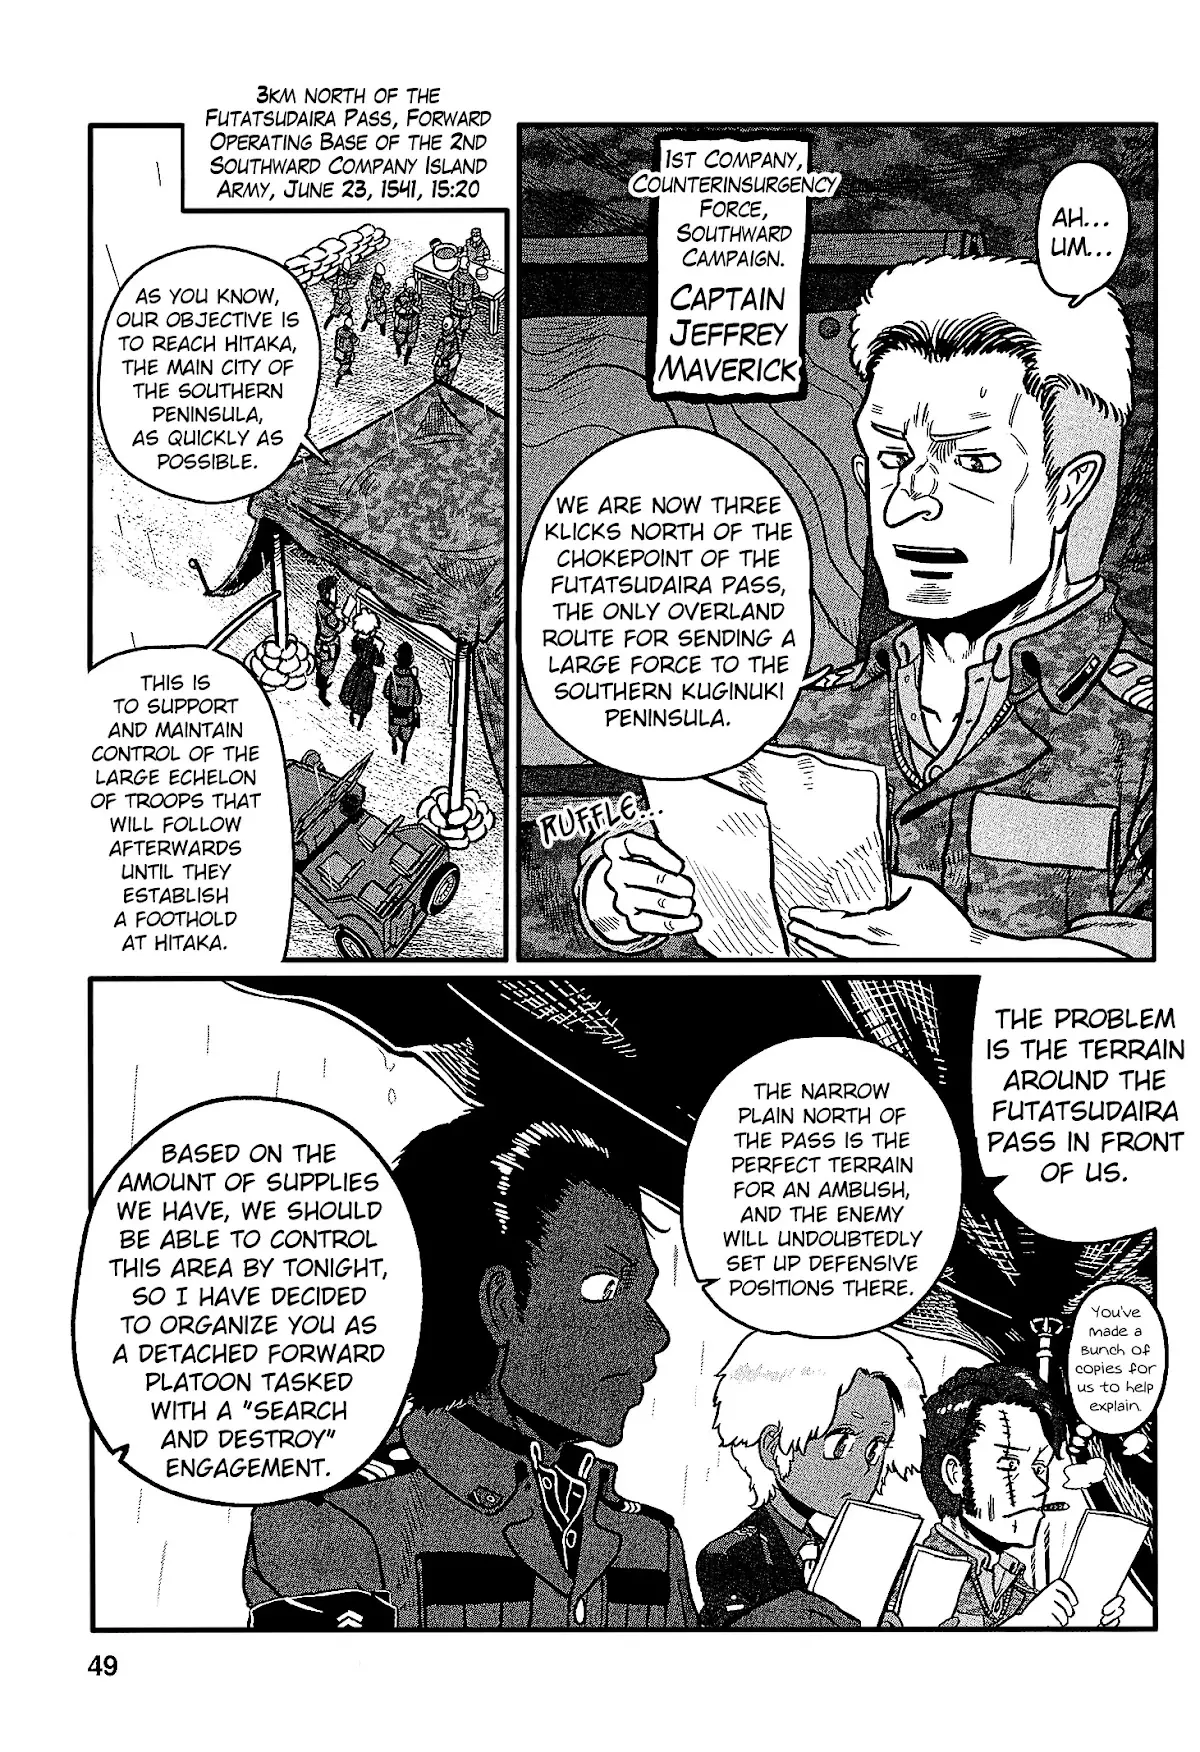 Groundless - Sekigan No Sogekihei - 26 page 7-a9731946